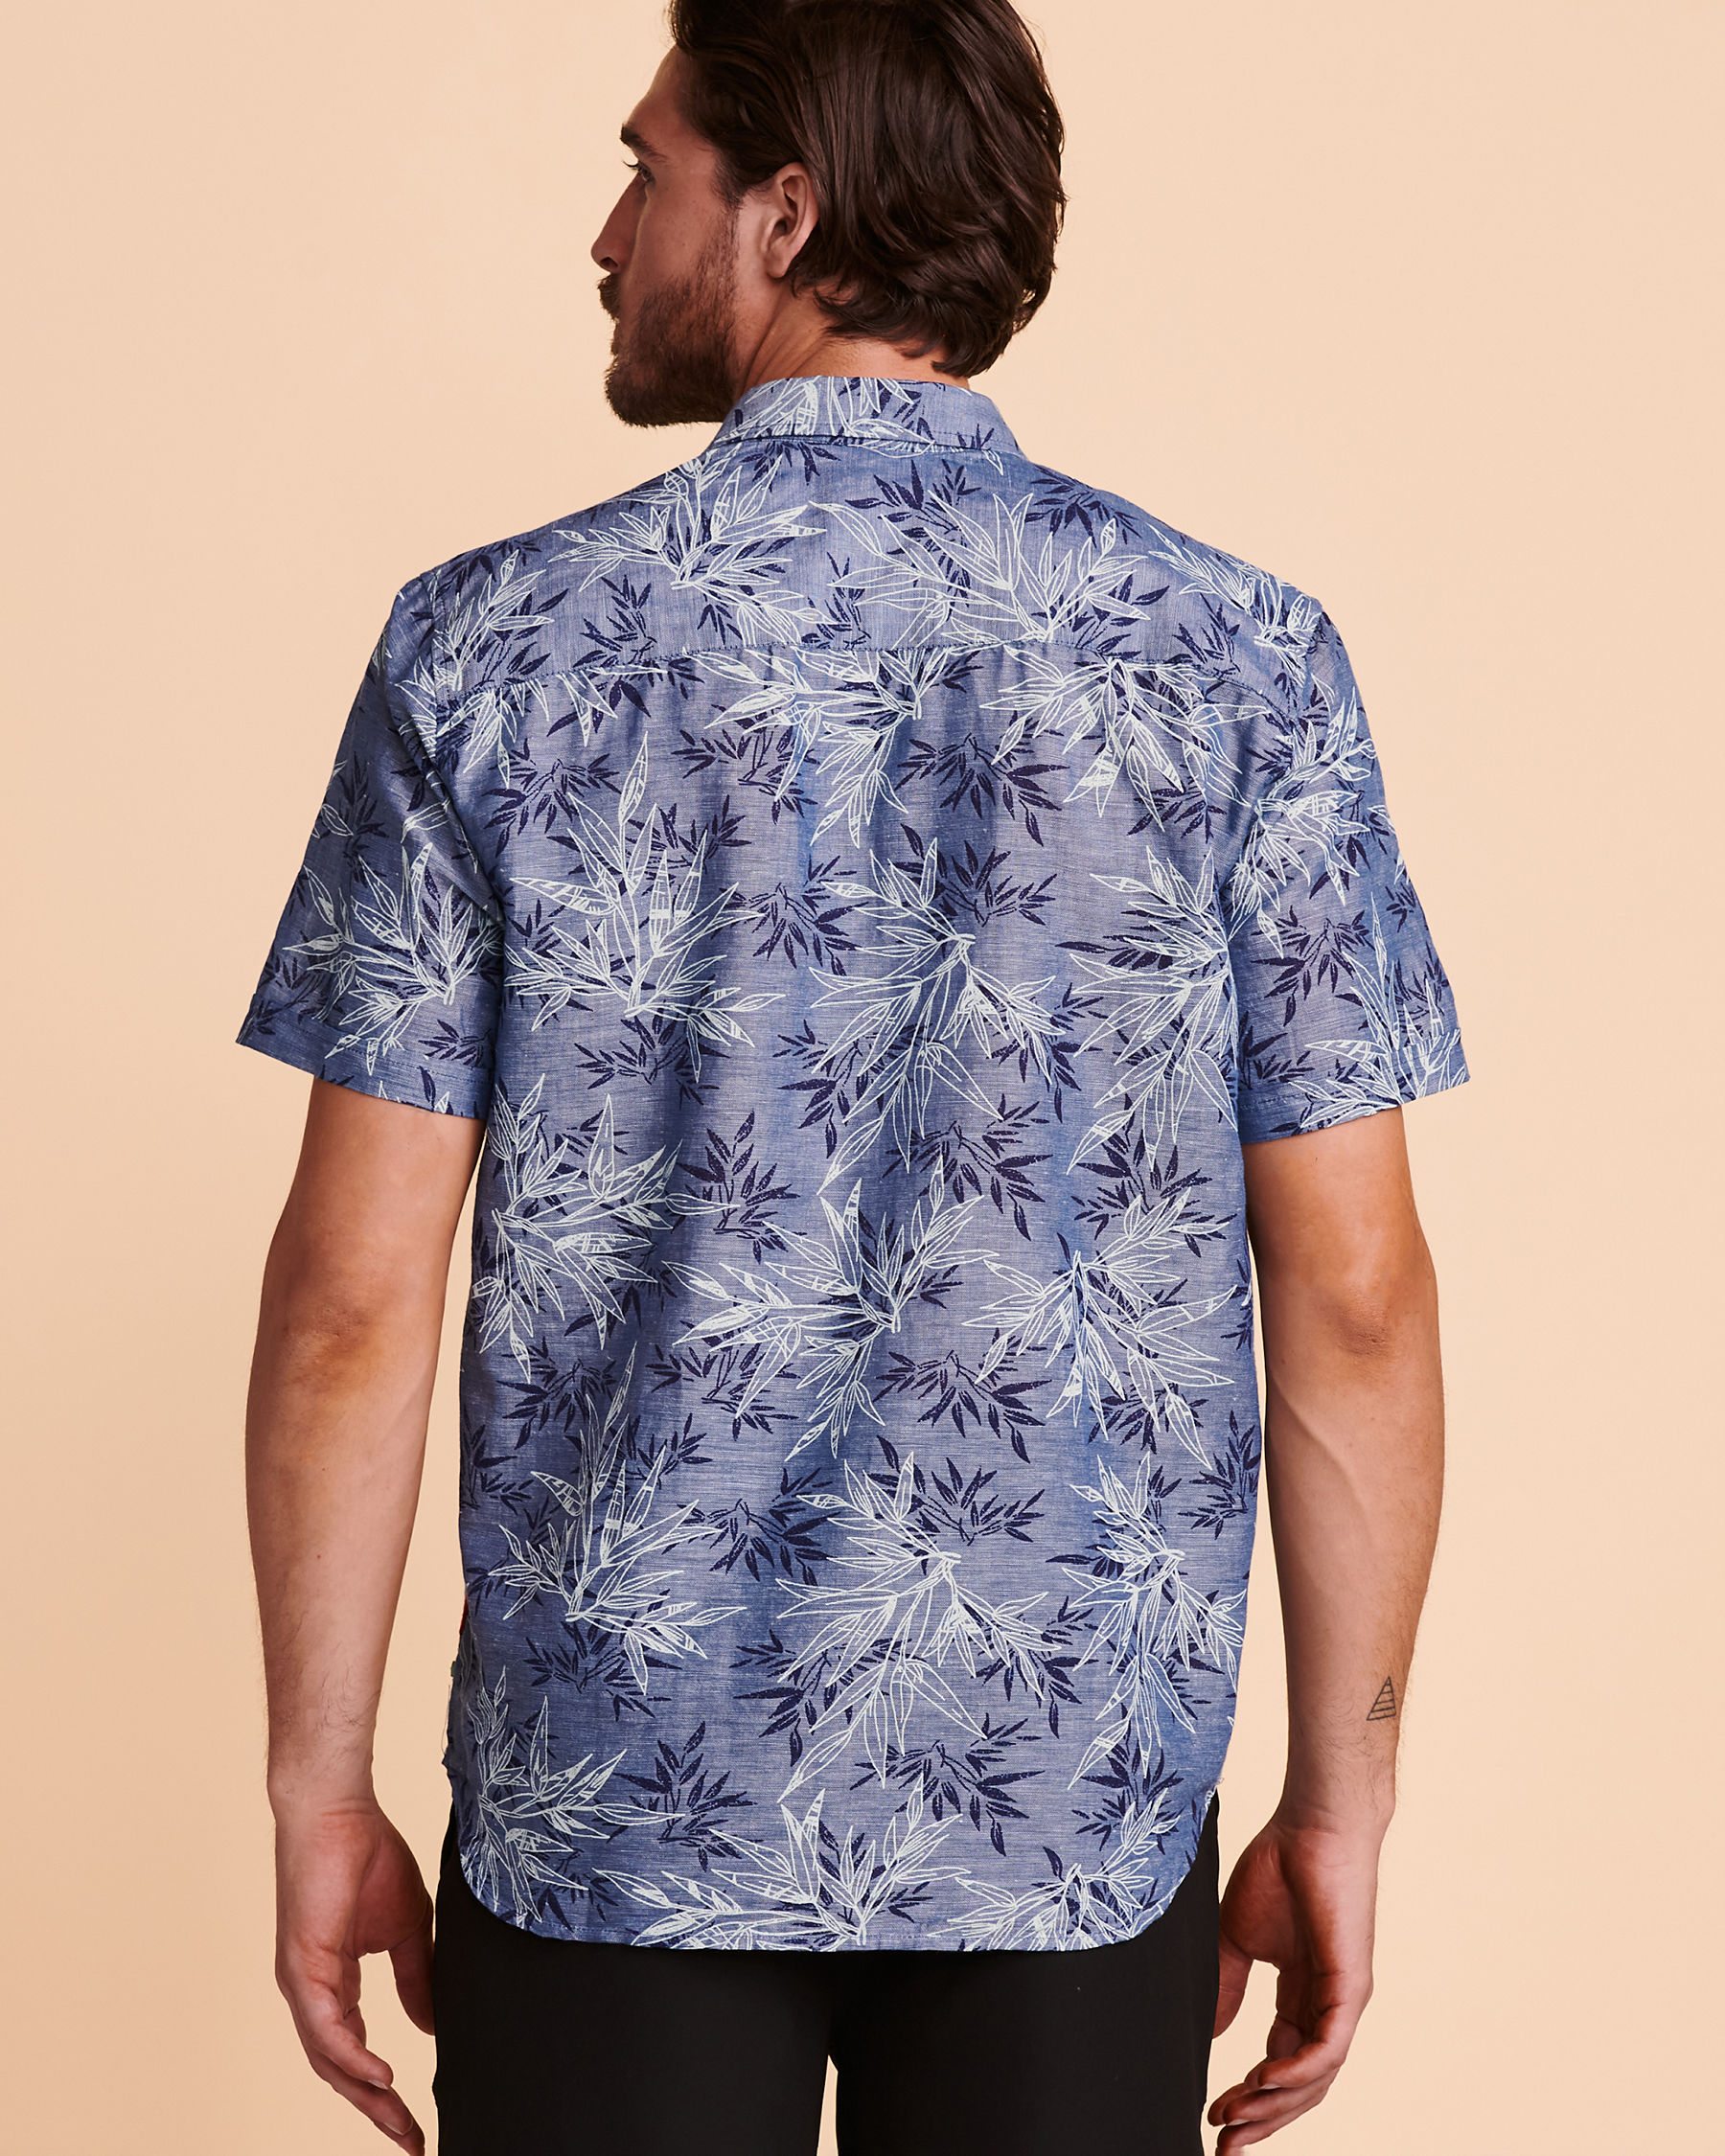 PUBLIC BEACH Short Sleeves Shirt Blue with prints PB2201-06 - View2